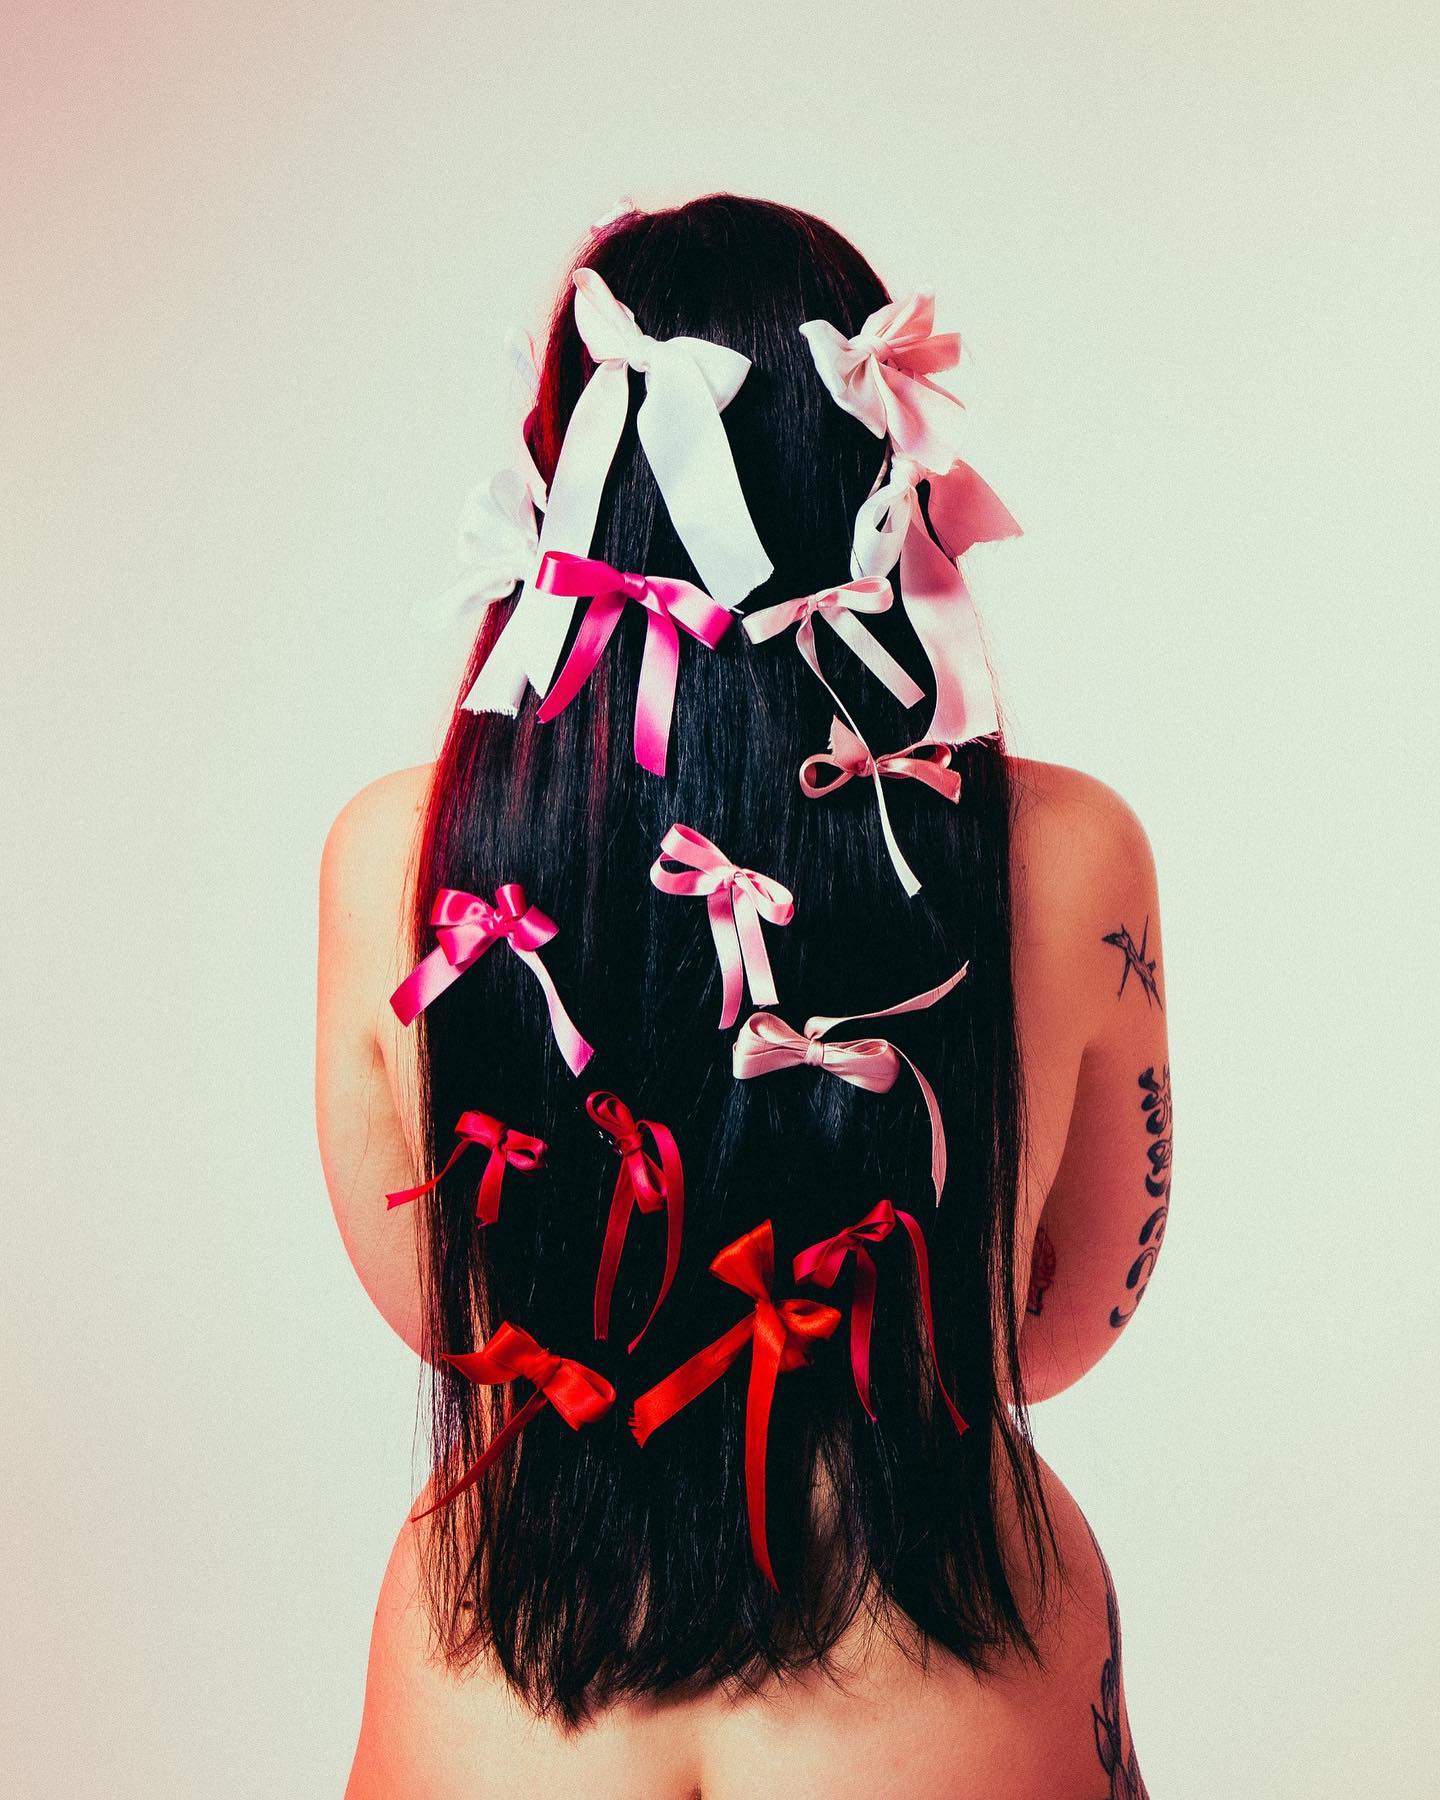 Dreamy on @virtusmagazine 

Art director @ineliide
Photographer @opocaj.photography / @giulia_frump 
Hairstyle/Makeup @ninn0li 
Model @ineliide 
Studio @wovo.housee 

#photooftheday #photography #backstage #photo #model #cupid #ribbon #curvy #midesize #bodyneutrality #bodypositive #selflove #love